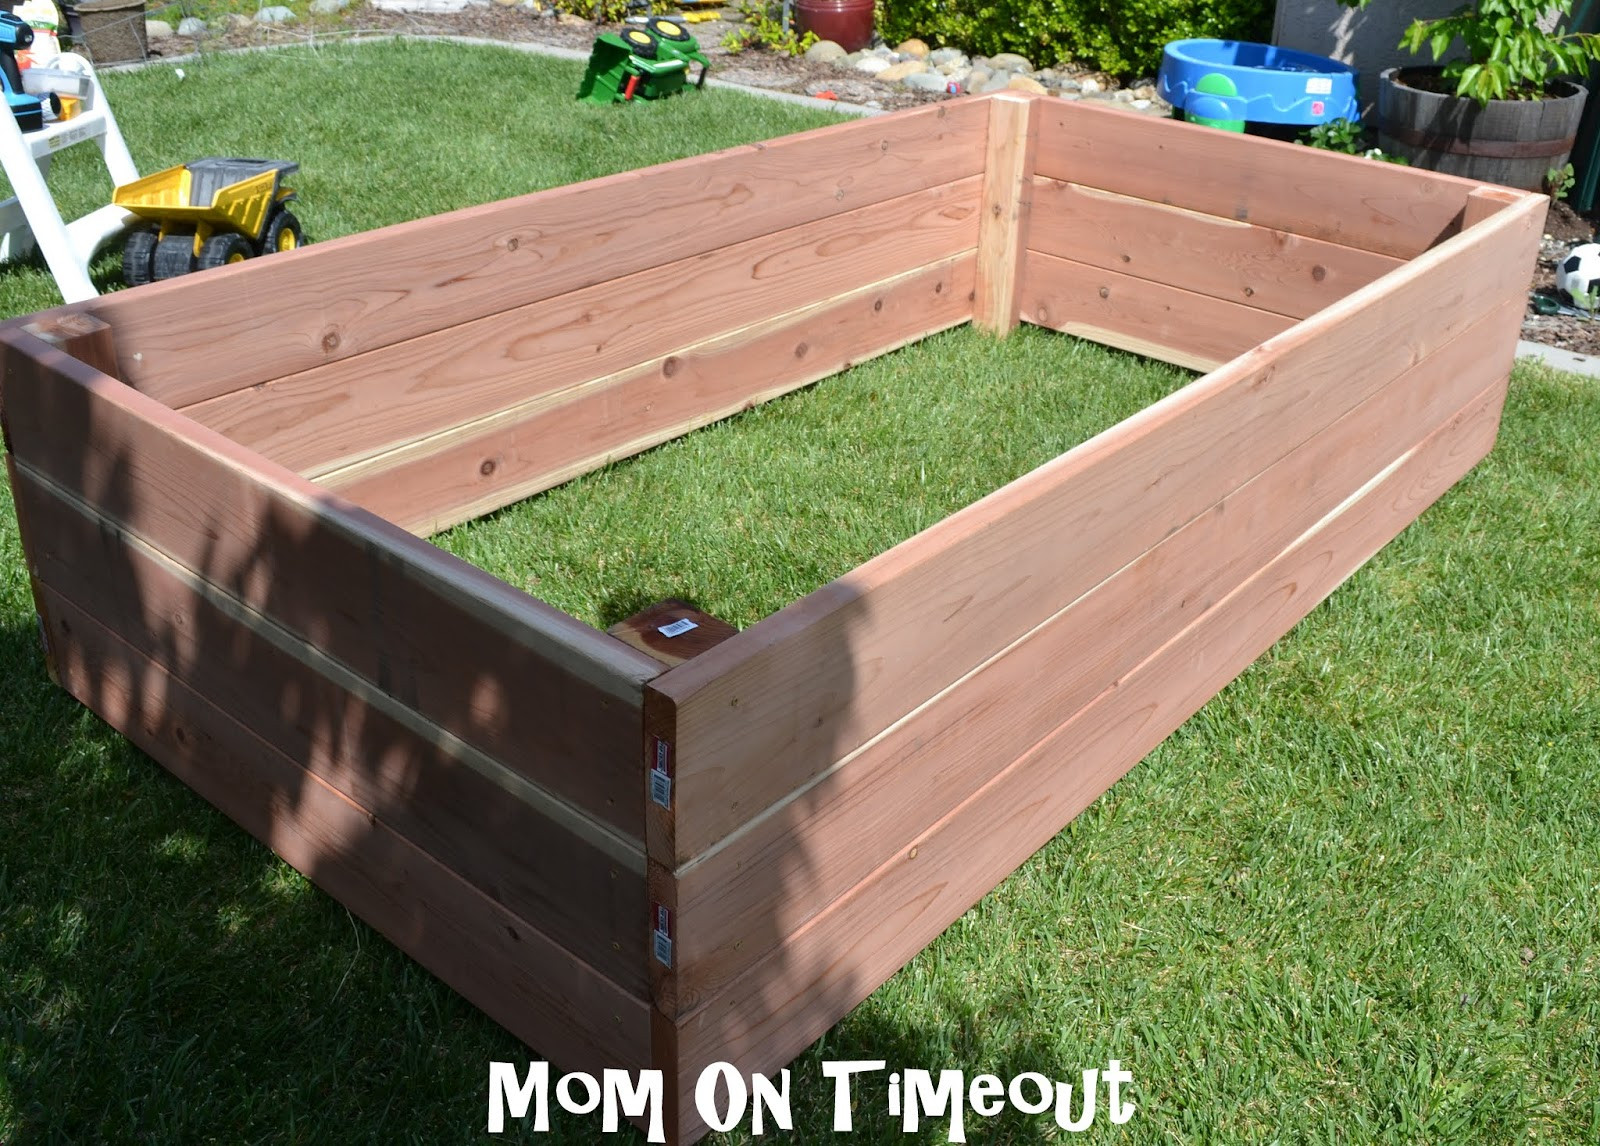 Best ideas about DIY Planter Box
. Save or Pin DIY Garden Planter Box Tutorial Now.